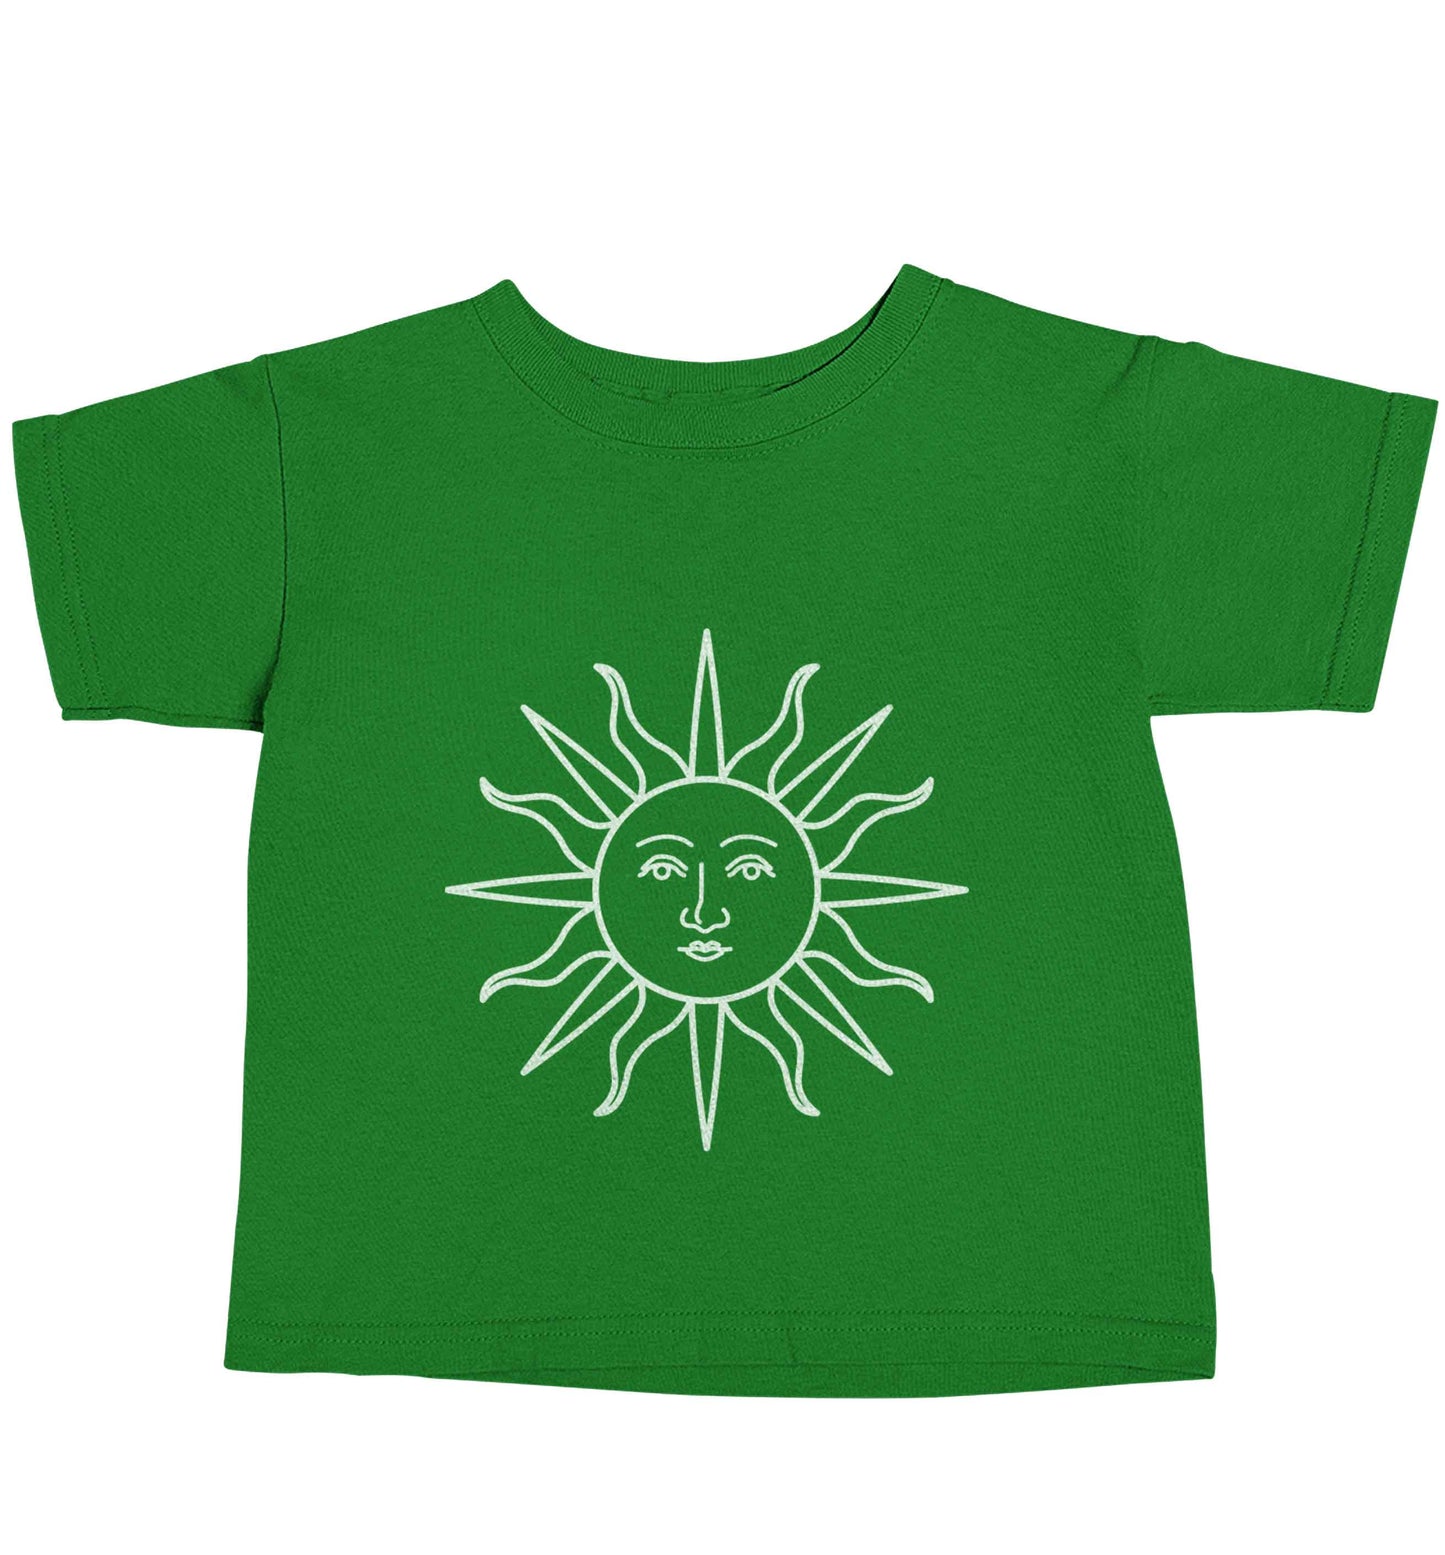 Sun face illustration green baby toddler Tshirt 2 Years